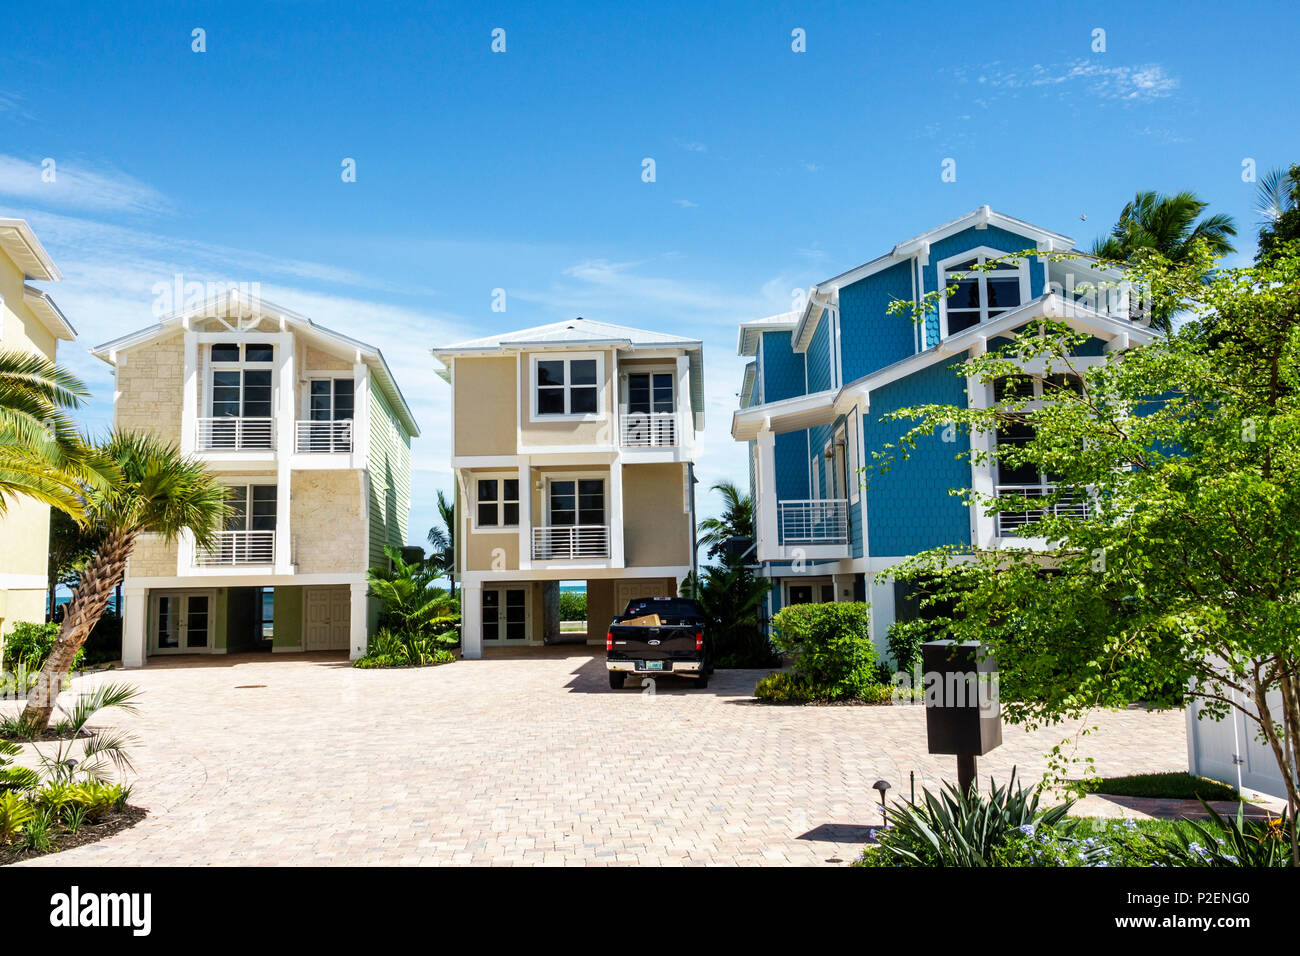 Florida Upper Florida Keys,Lower Matecumbe Key,Islamorada,Tarpon Point,new houses homes sale,oceanfront residences,gated community,luxury real estate, Stock Photo